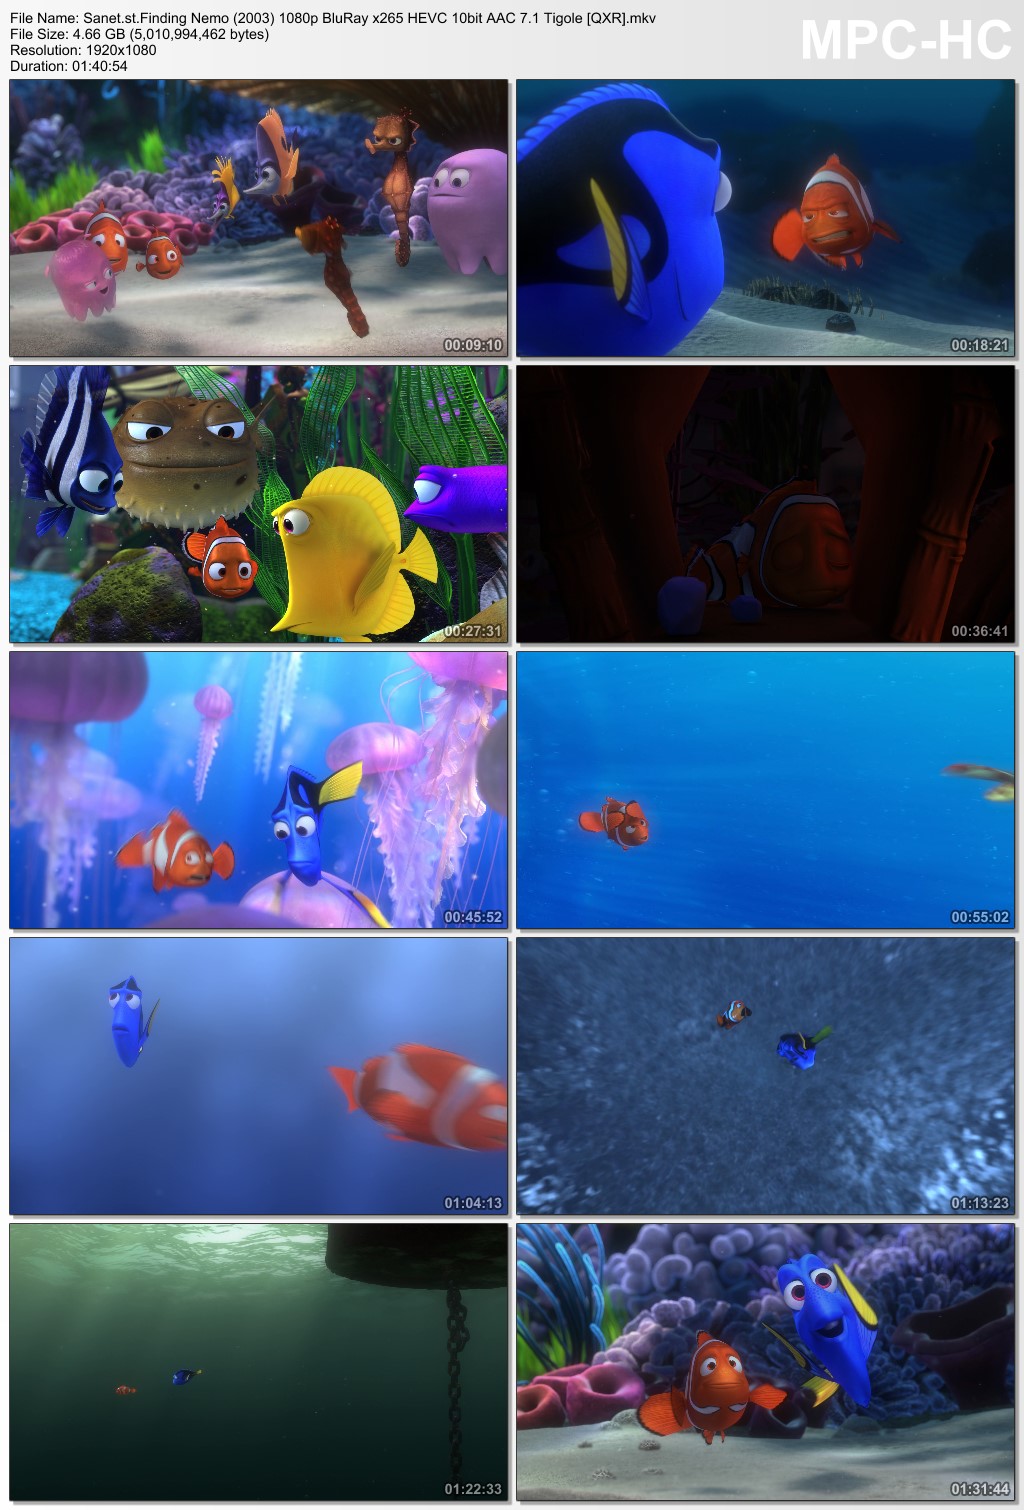 Finding Nemo 2003 1080p BluRay x265 HEVC 10bit AAC 7.1 Tigole QXR.